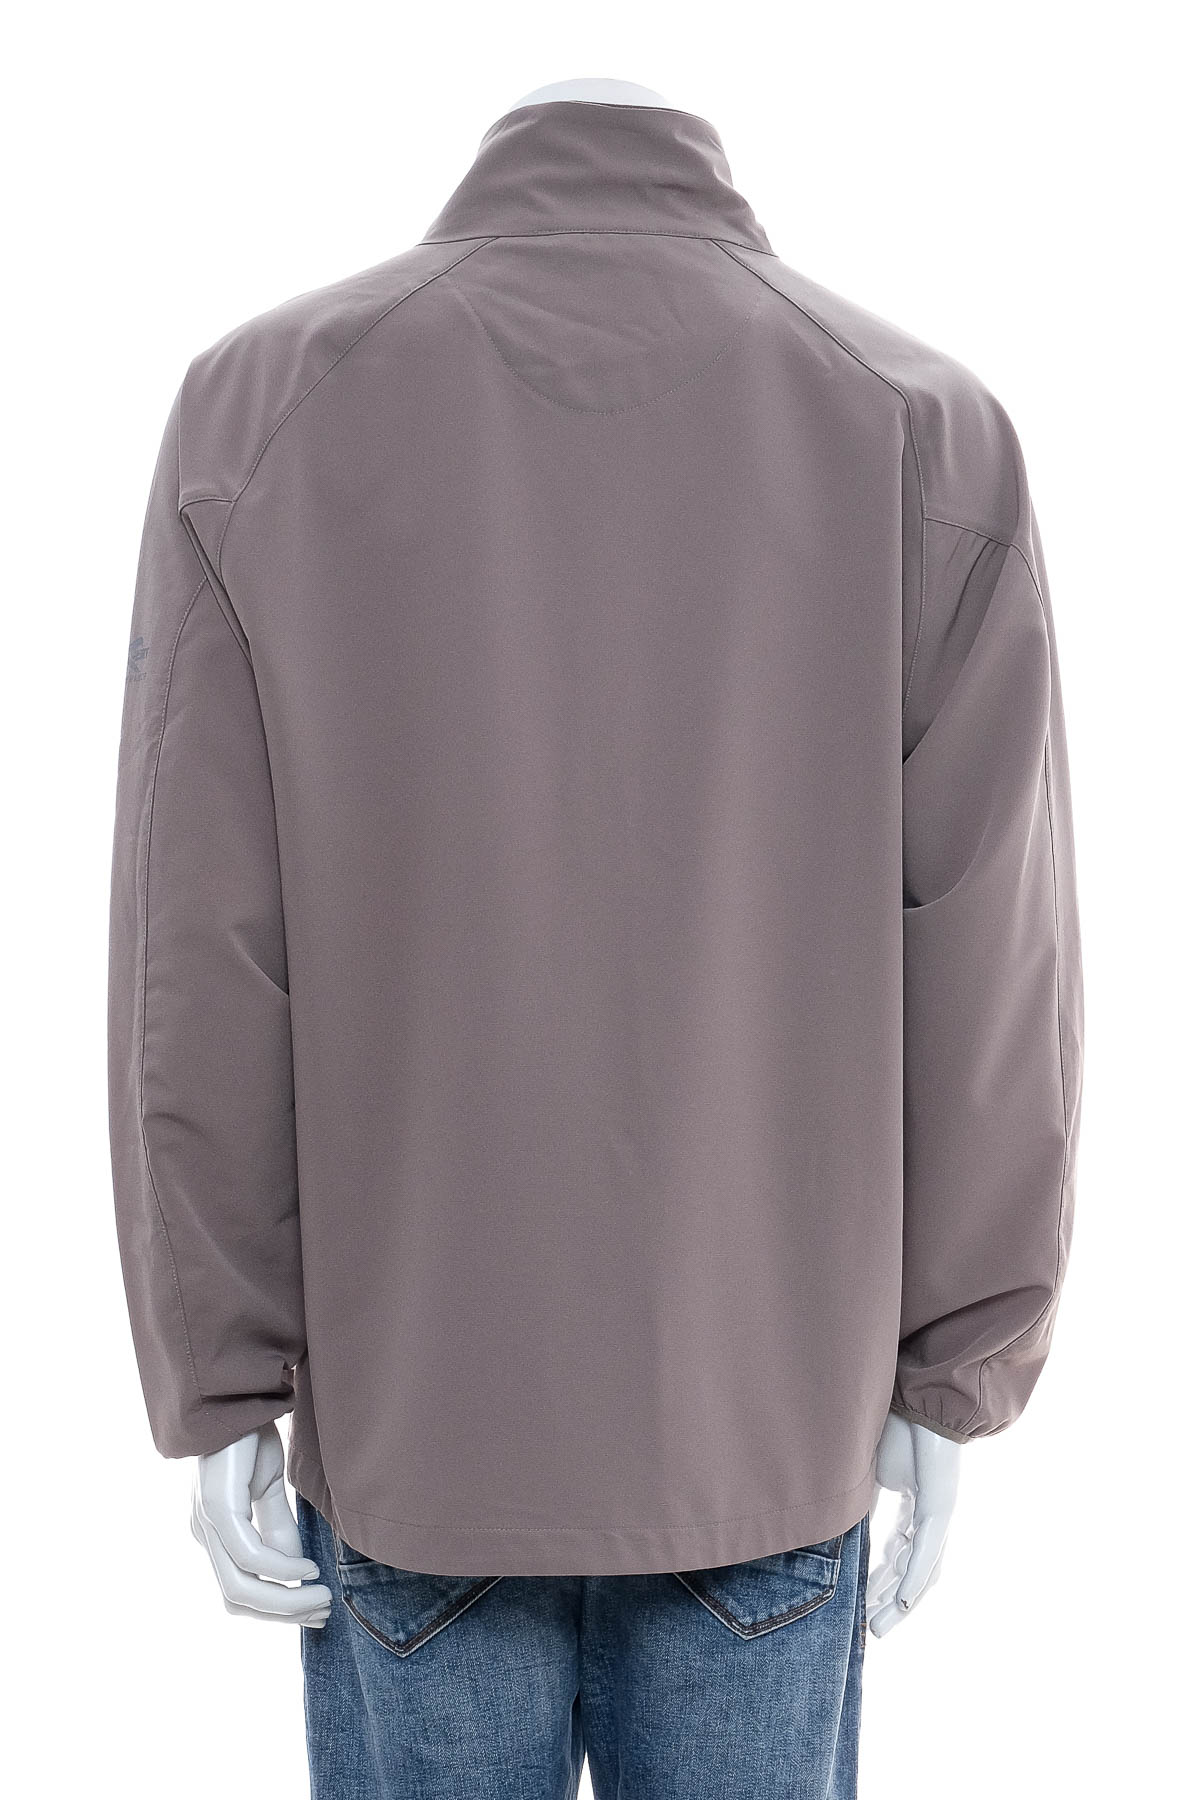 Men's sport blouse - Regatta - 1